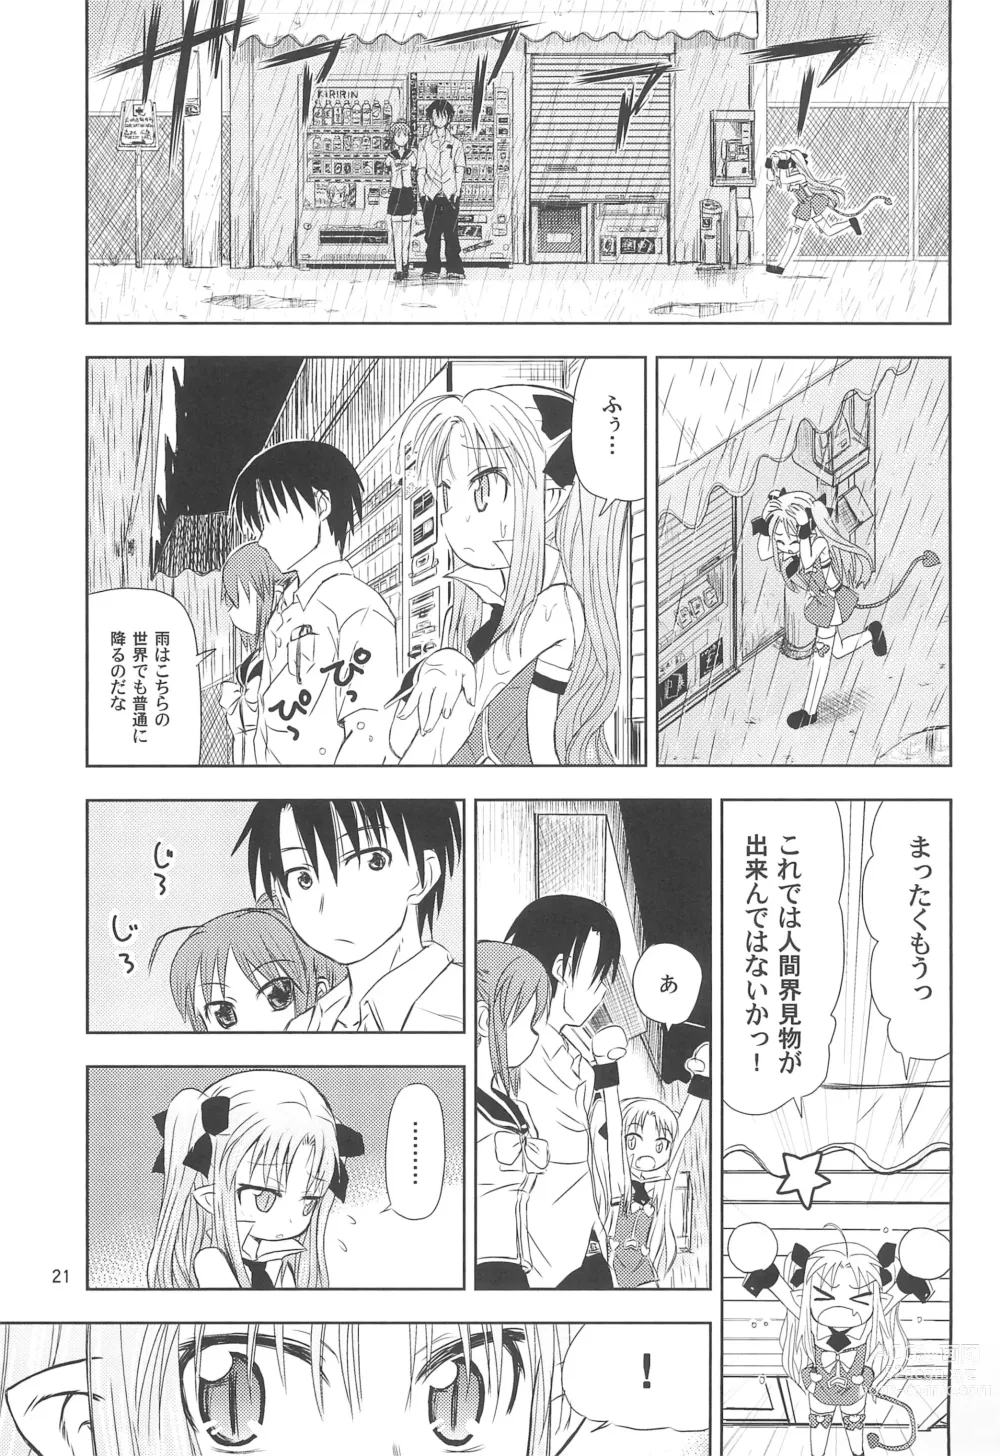 Page 21 of doujinshi Maigo no Maigo no Hime-sama Plus